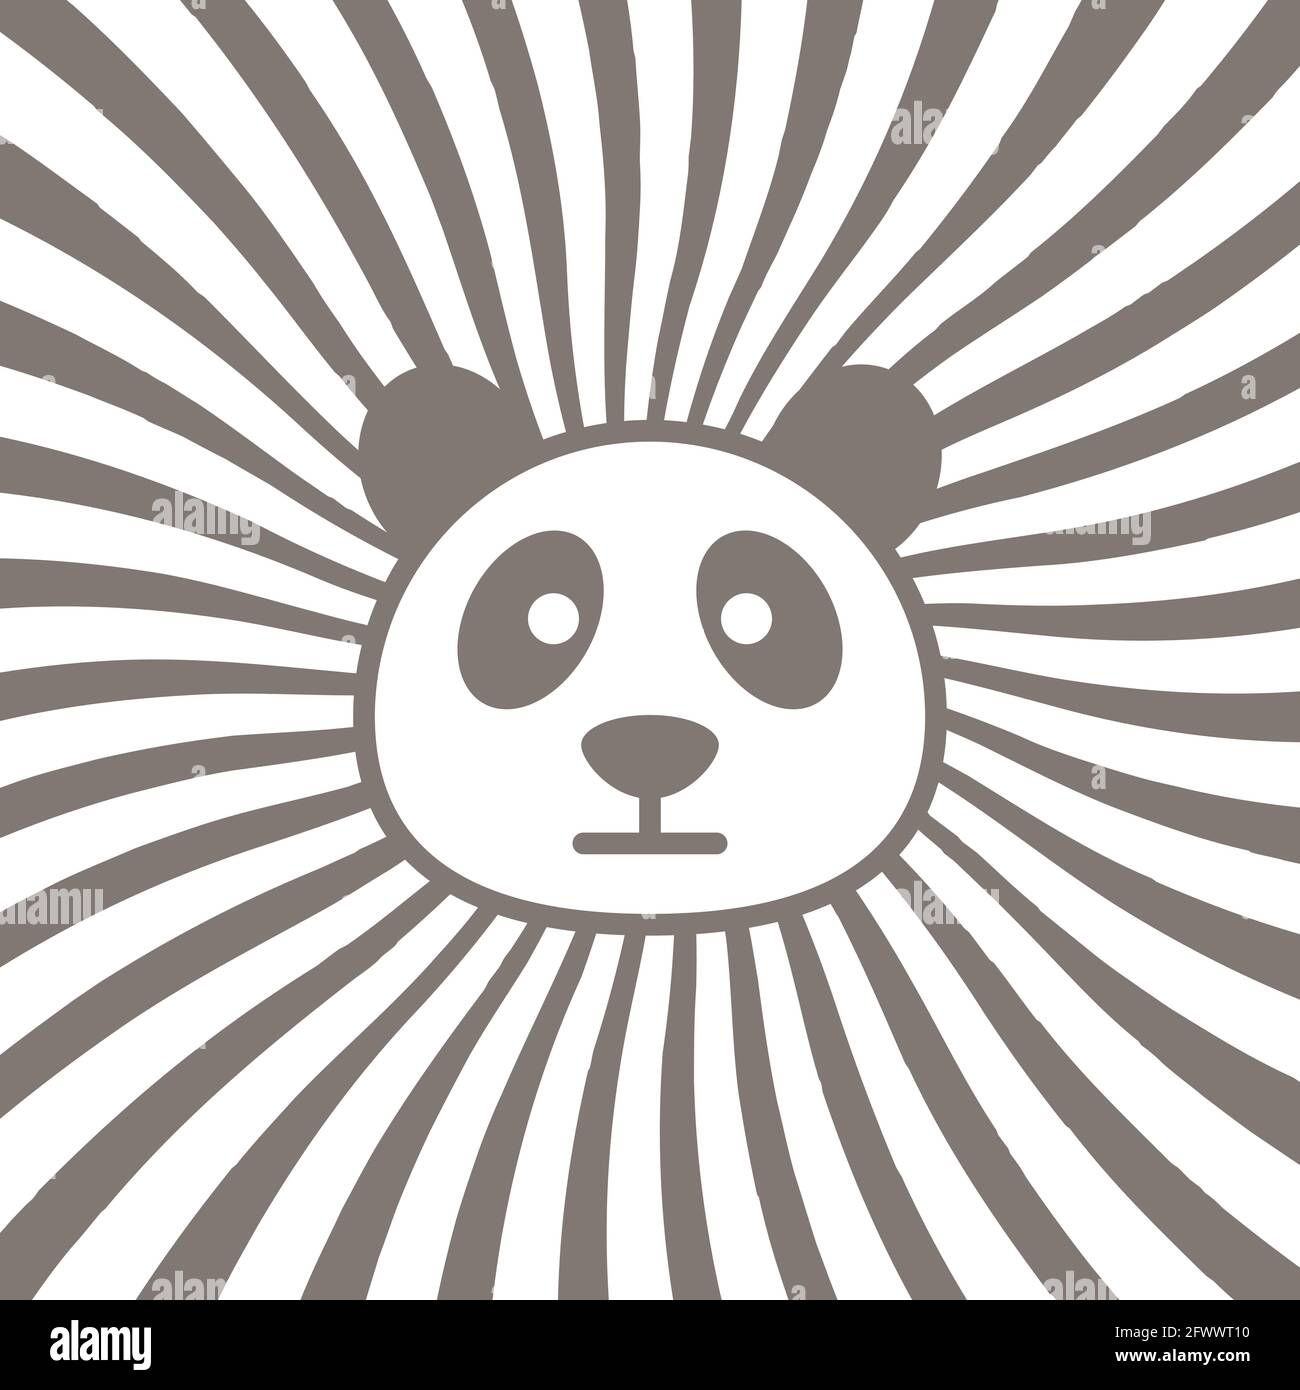 Bel panda Immagini Vettoriali Stock - Alamy